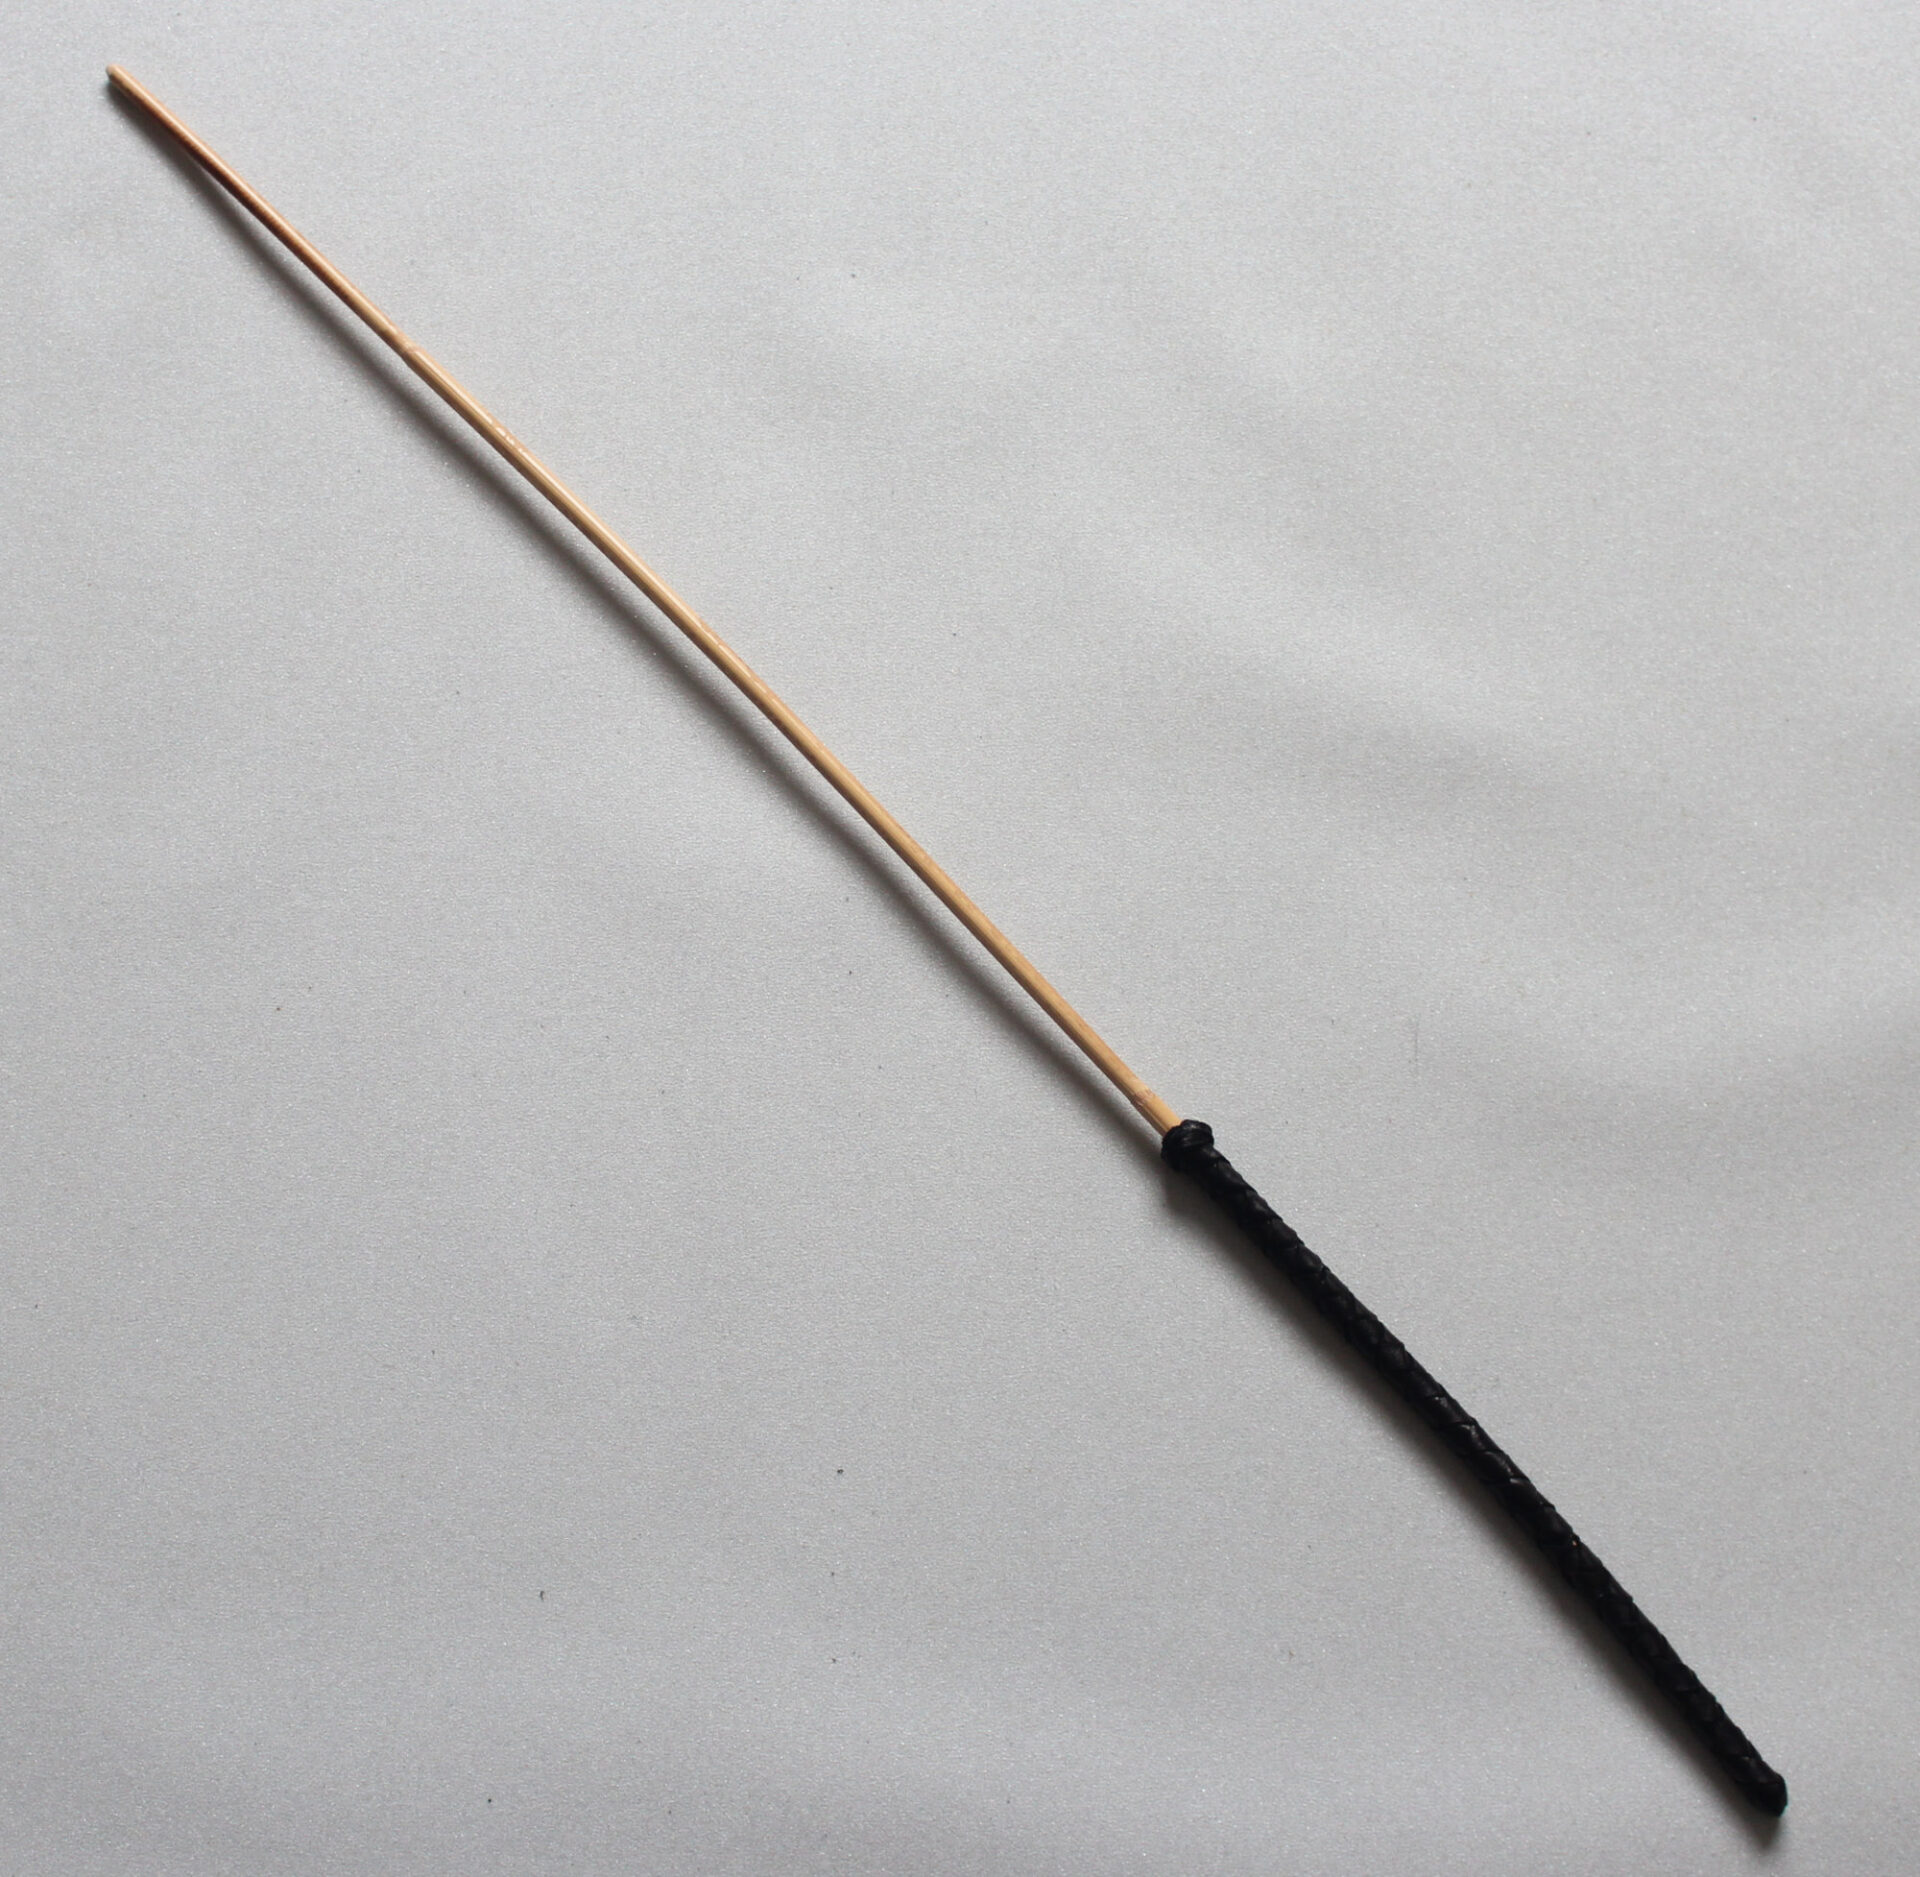 5mm-6mm Kooboo cane with braided handle